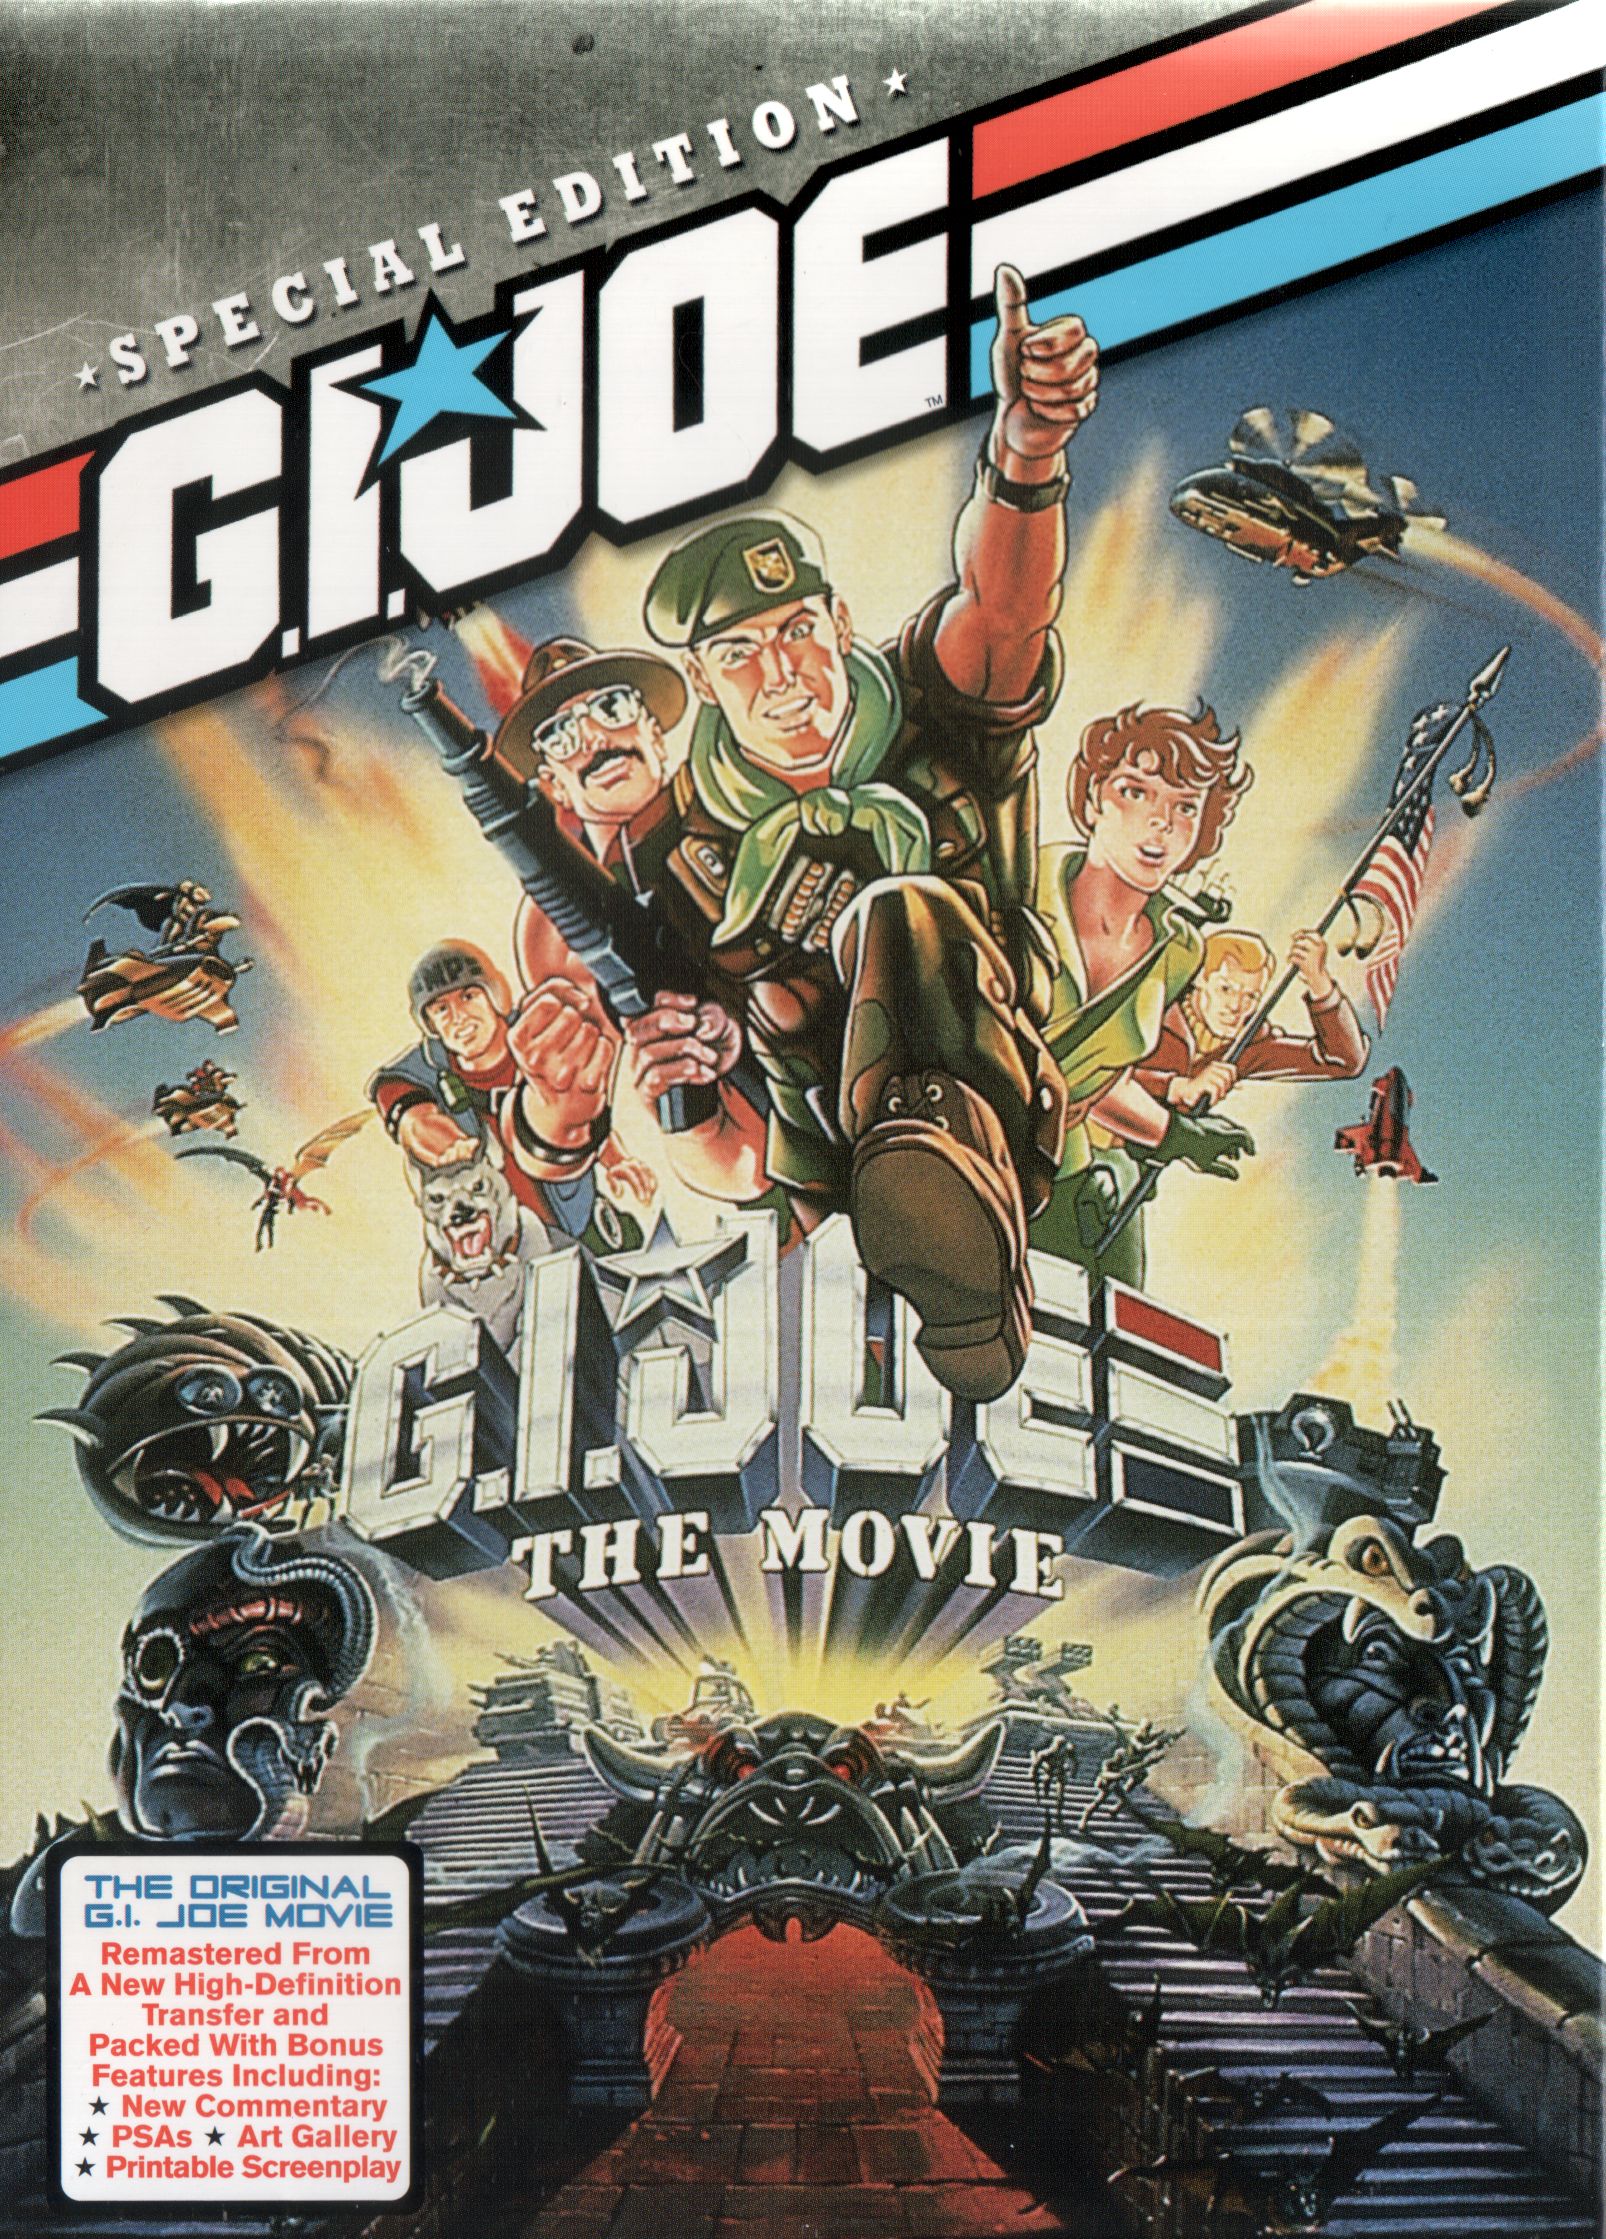 G.I. Joe - A mozifilm